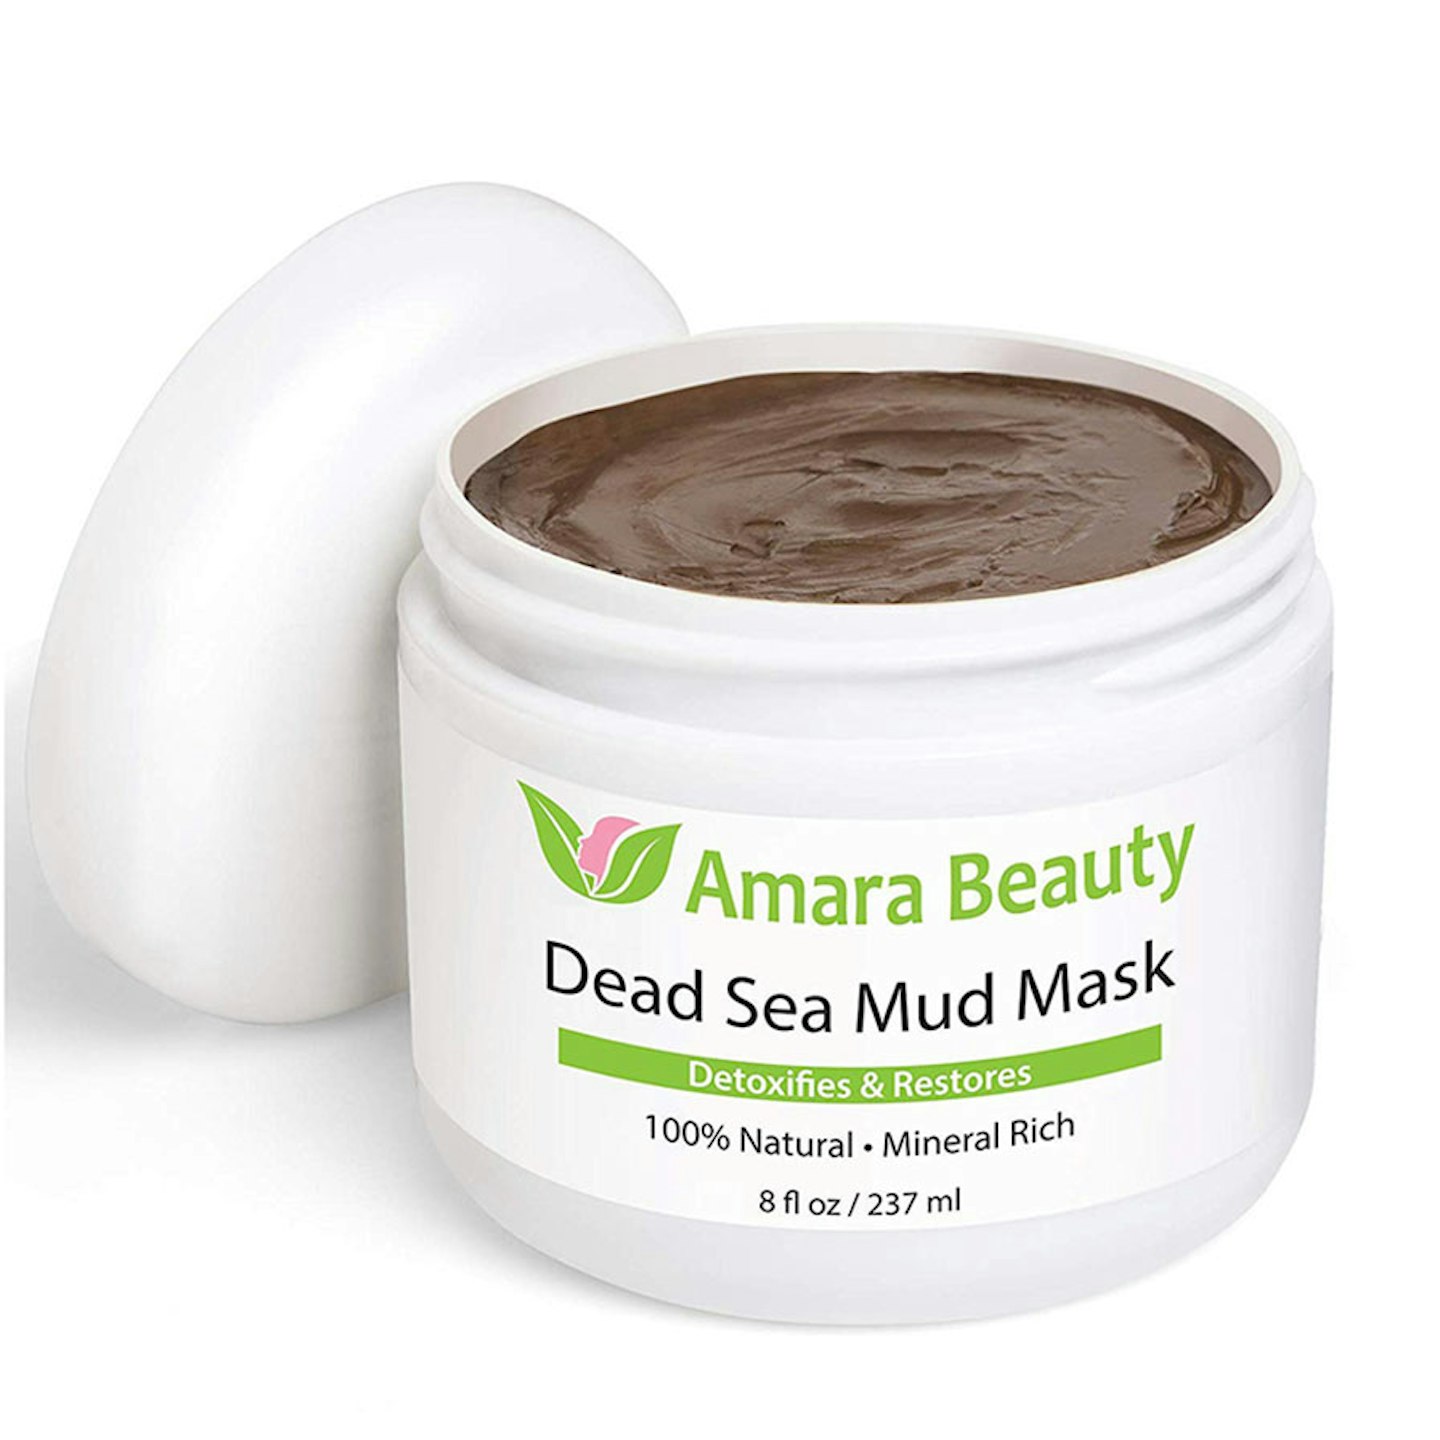 Amara Beauty Dead Sea Mud Mask for Face & Body, £19.95